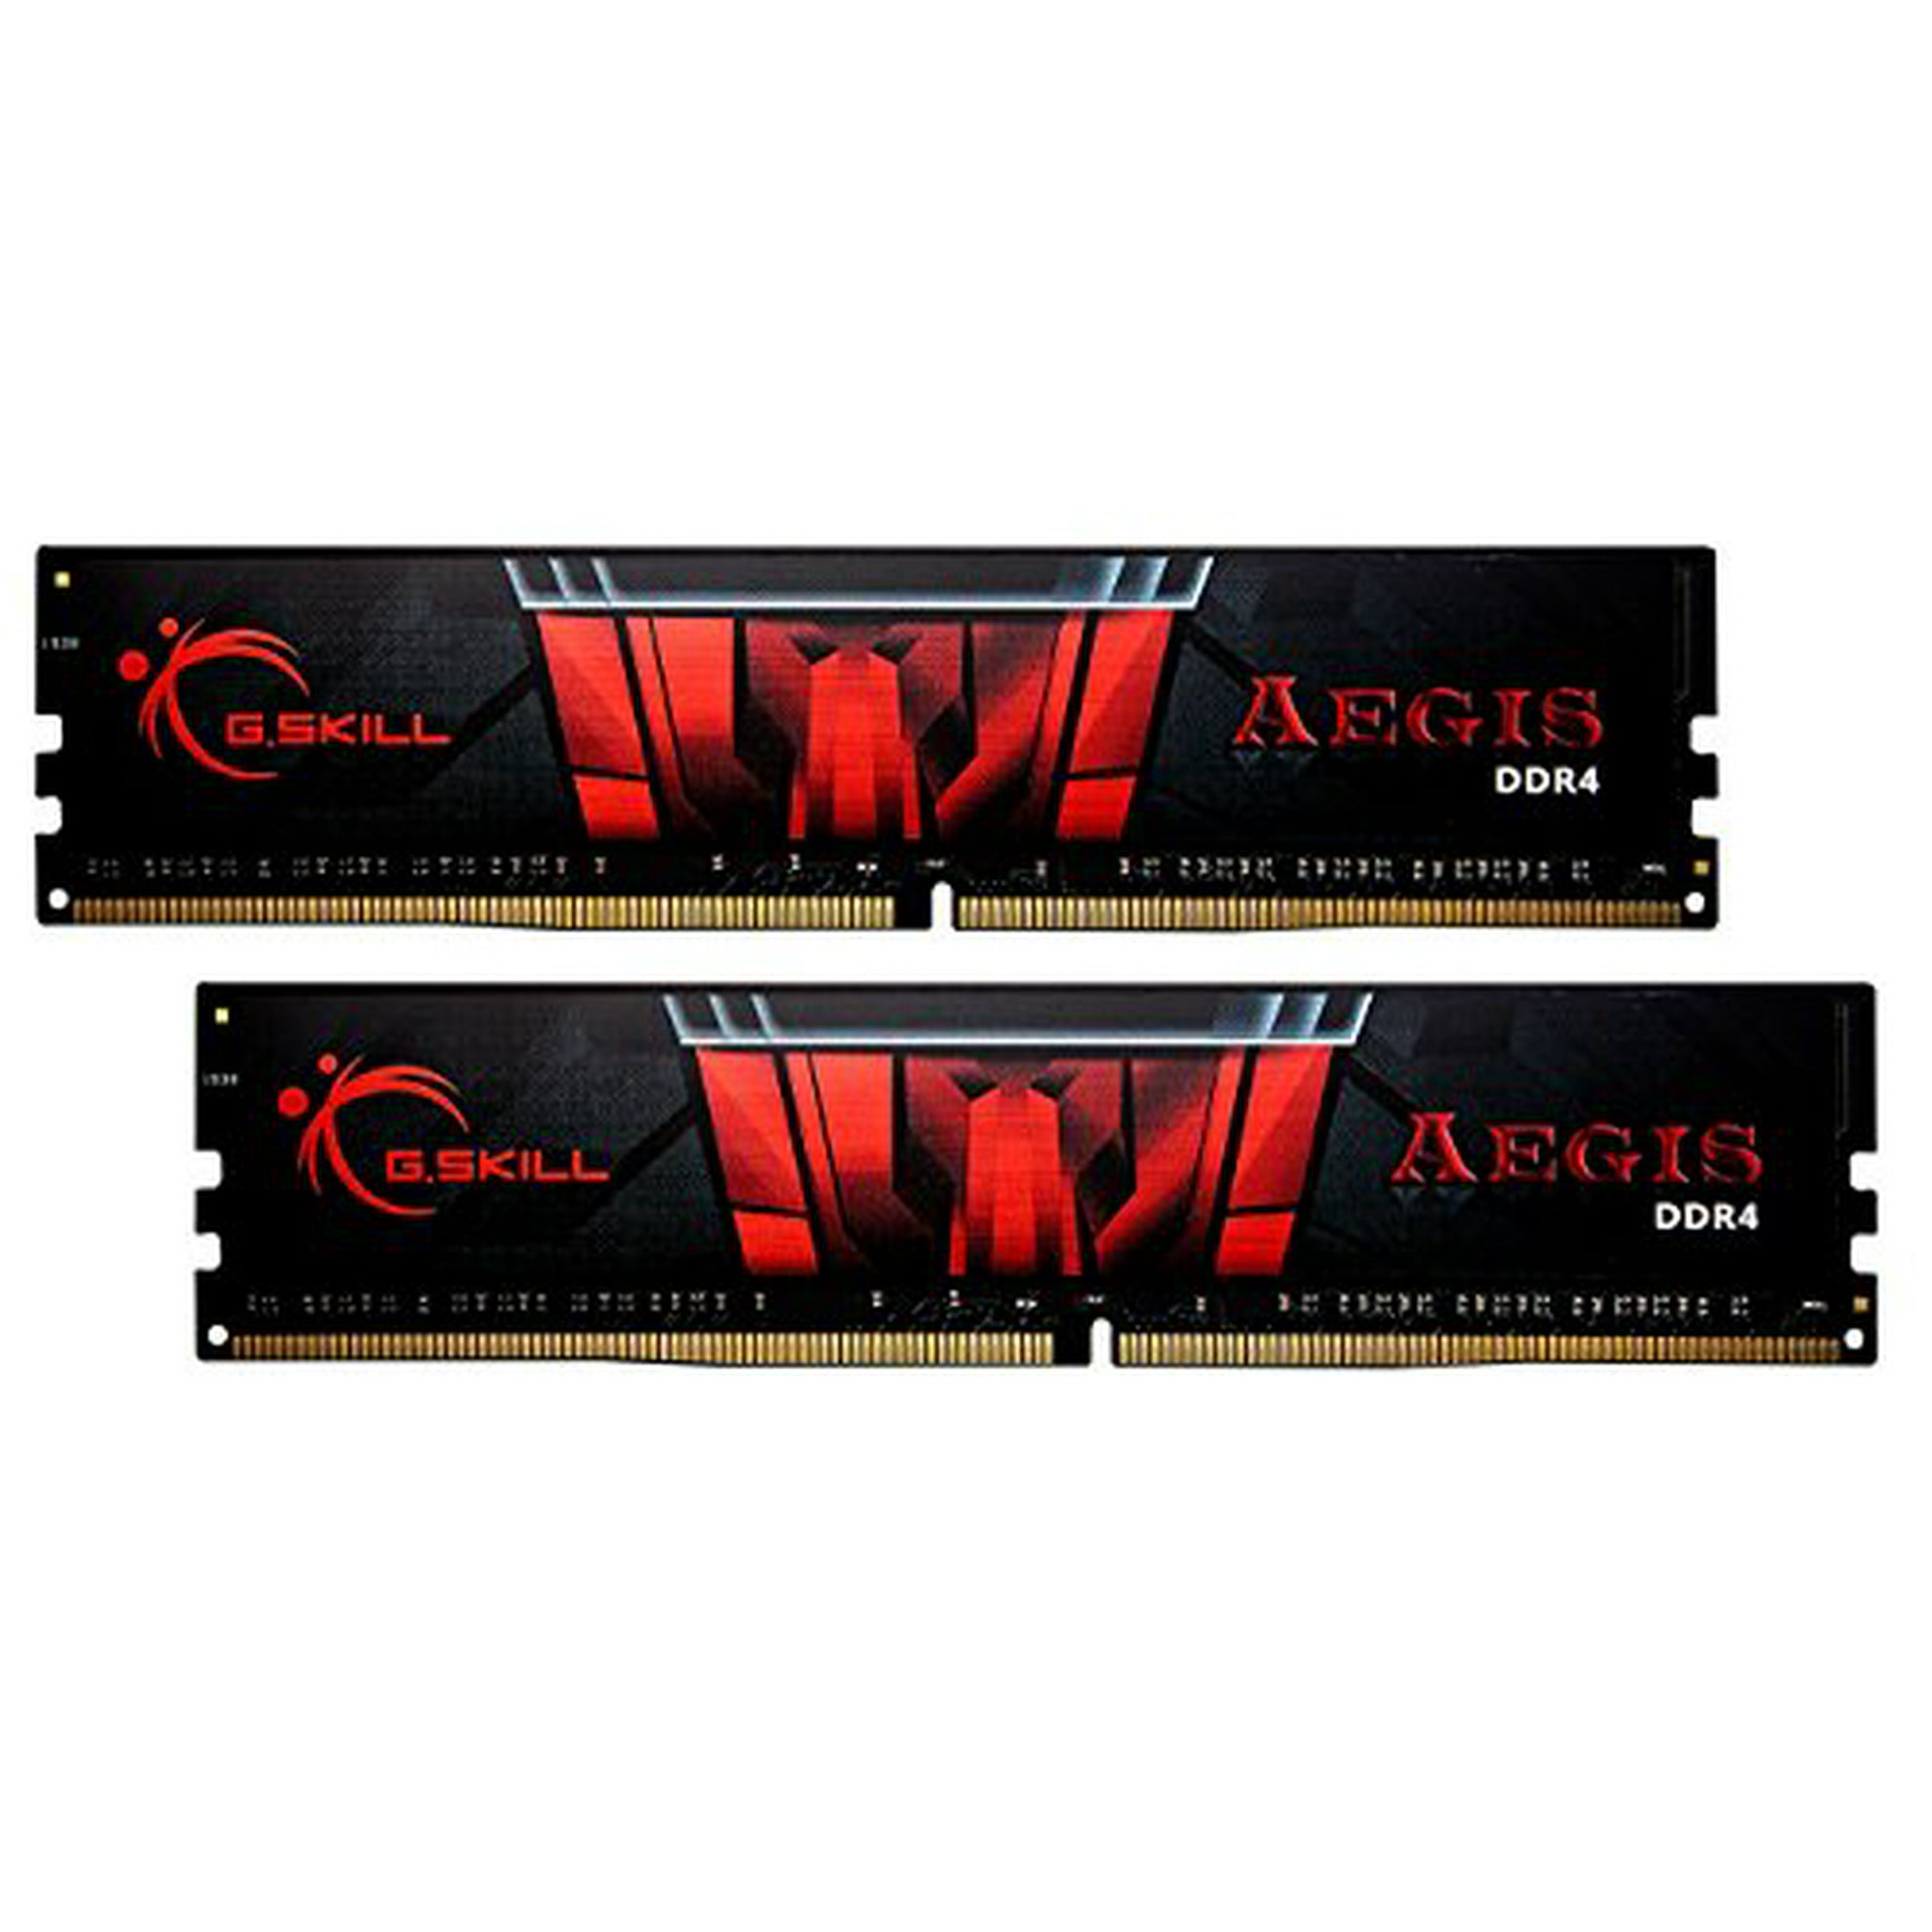 G.Skill 16GB (2 x 8GB) Aegis DDR4 PC4-24000 3000MHz for Intel Z170